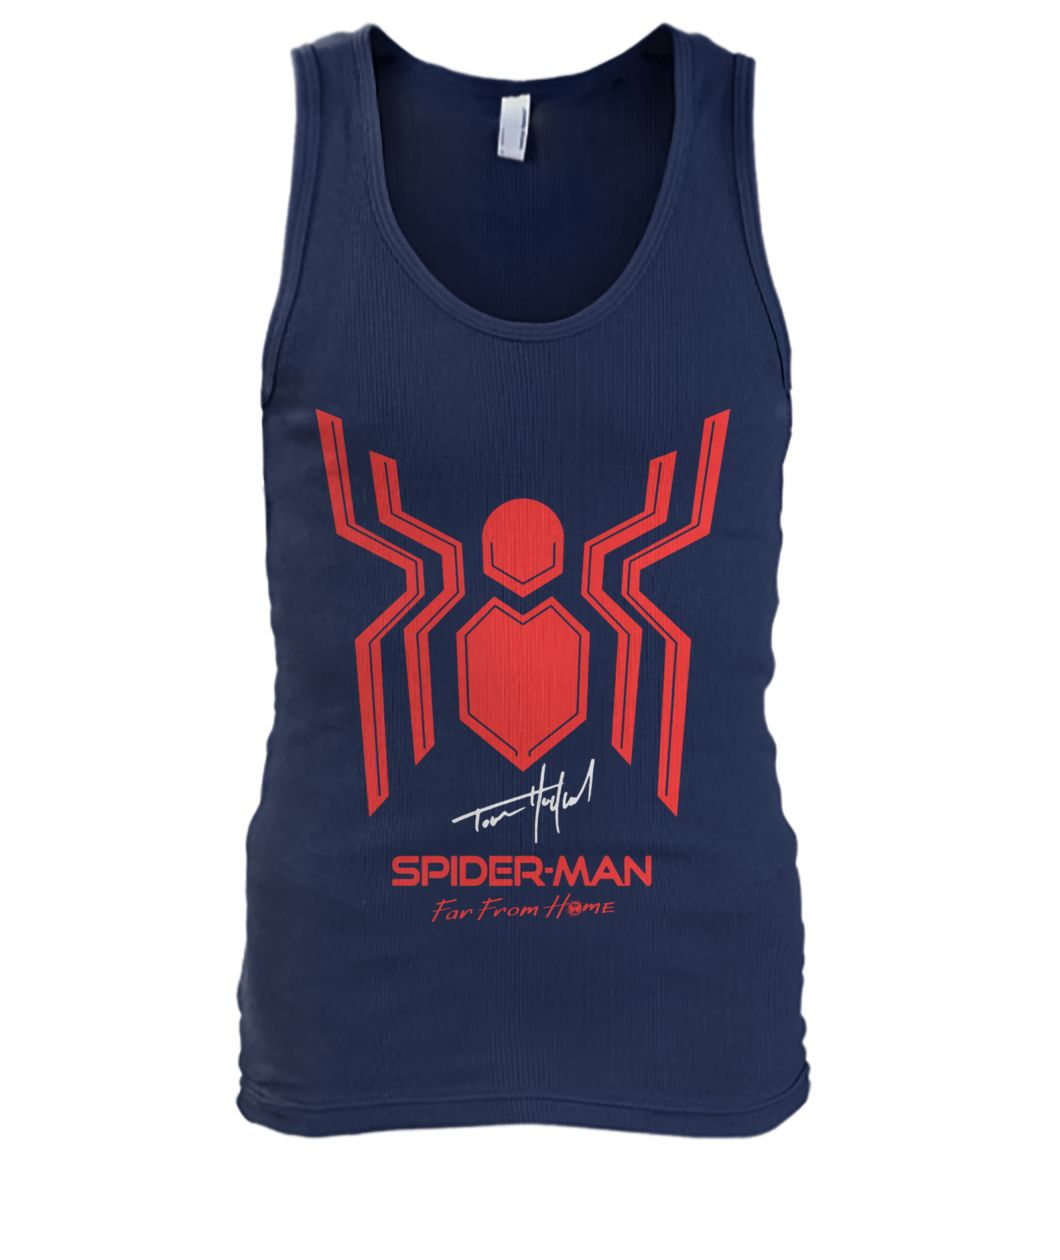 Marvel spider-man far from home men's tank top